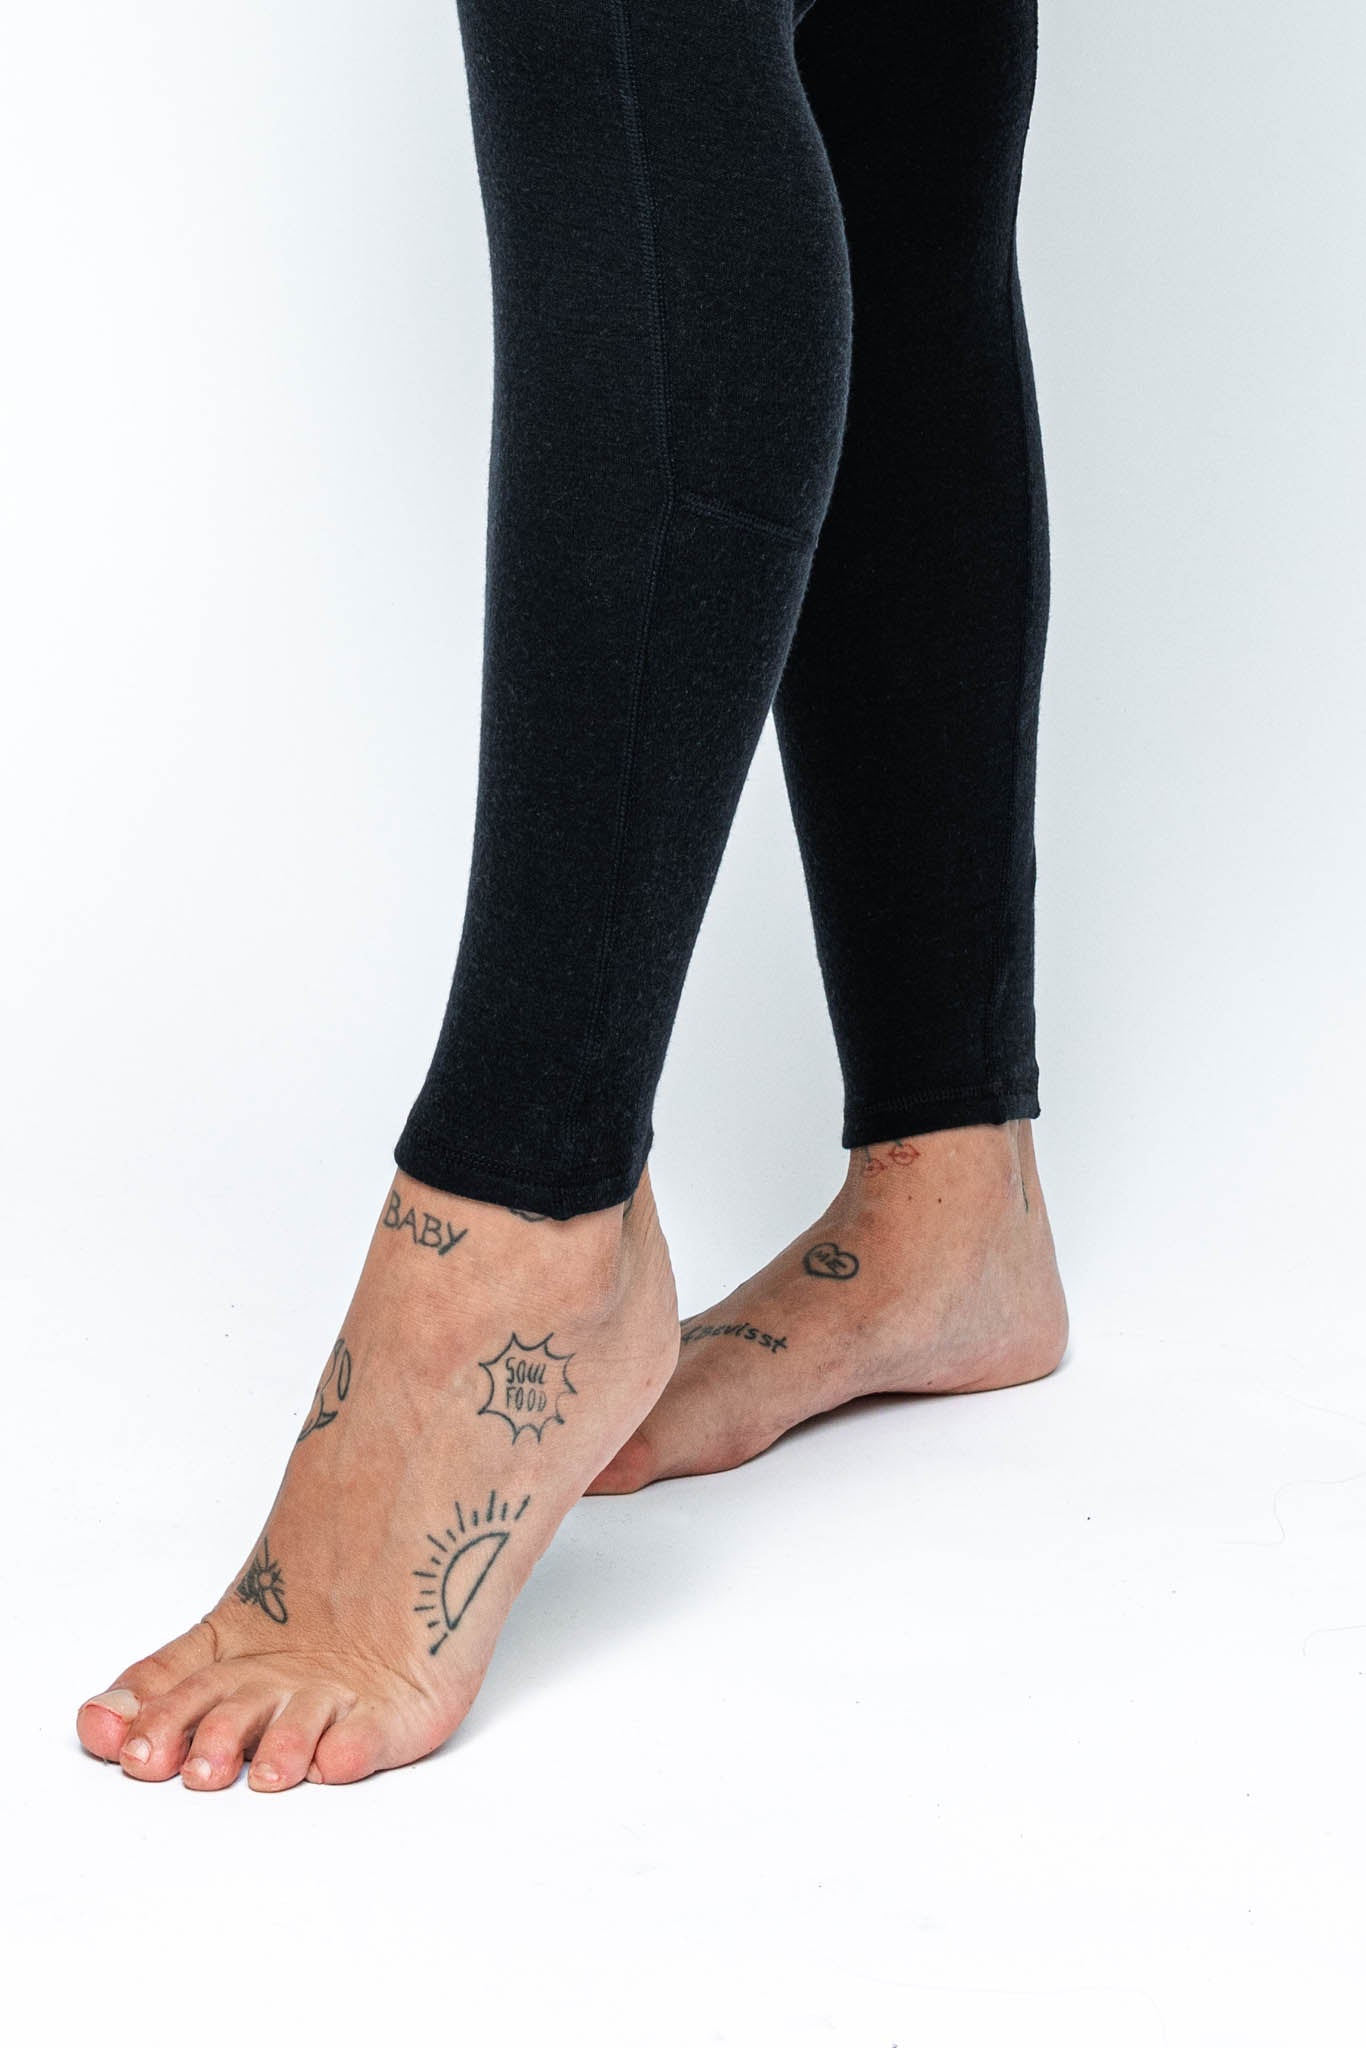 Fagerset Pant, Women's Merino Wool Leggings, Baselayer